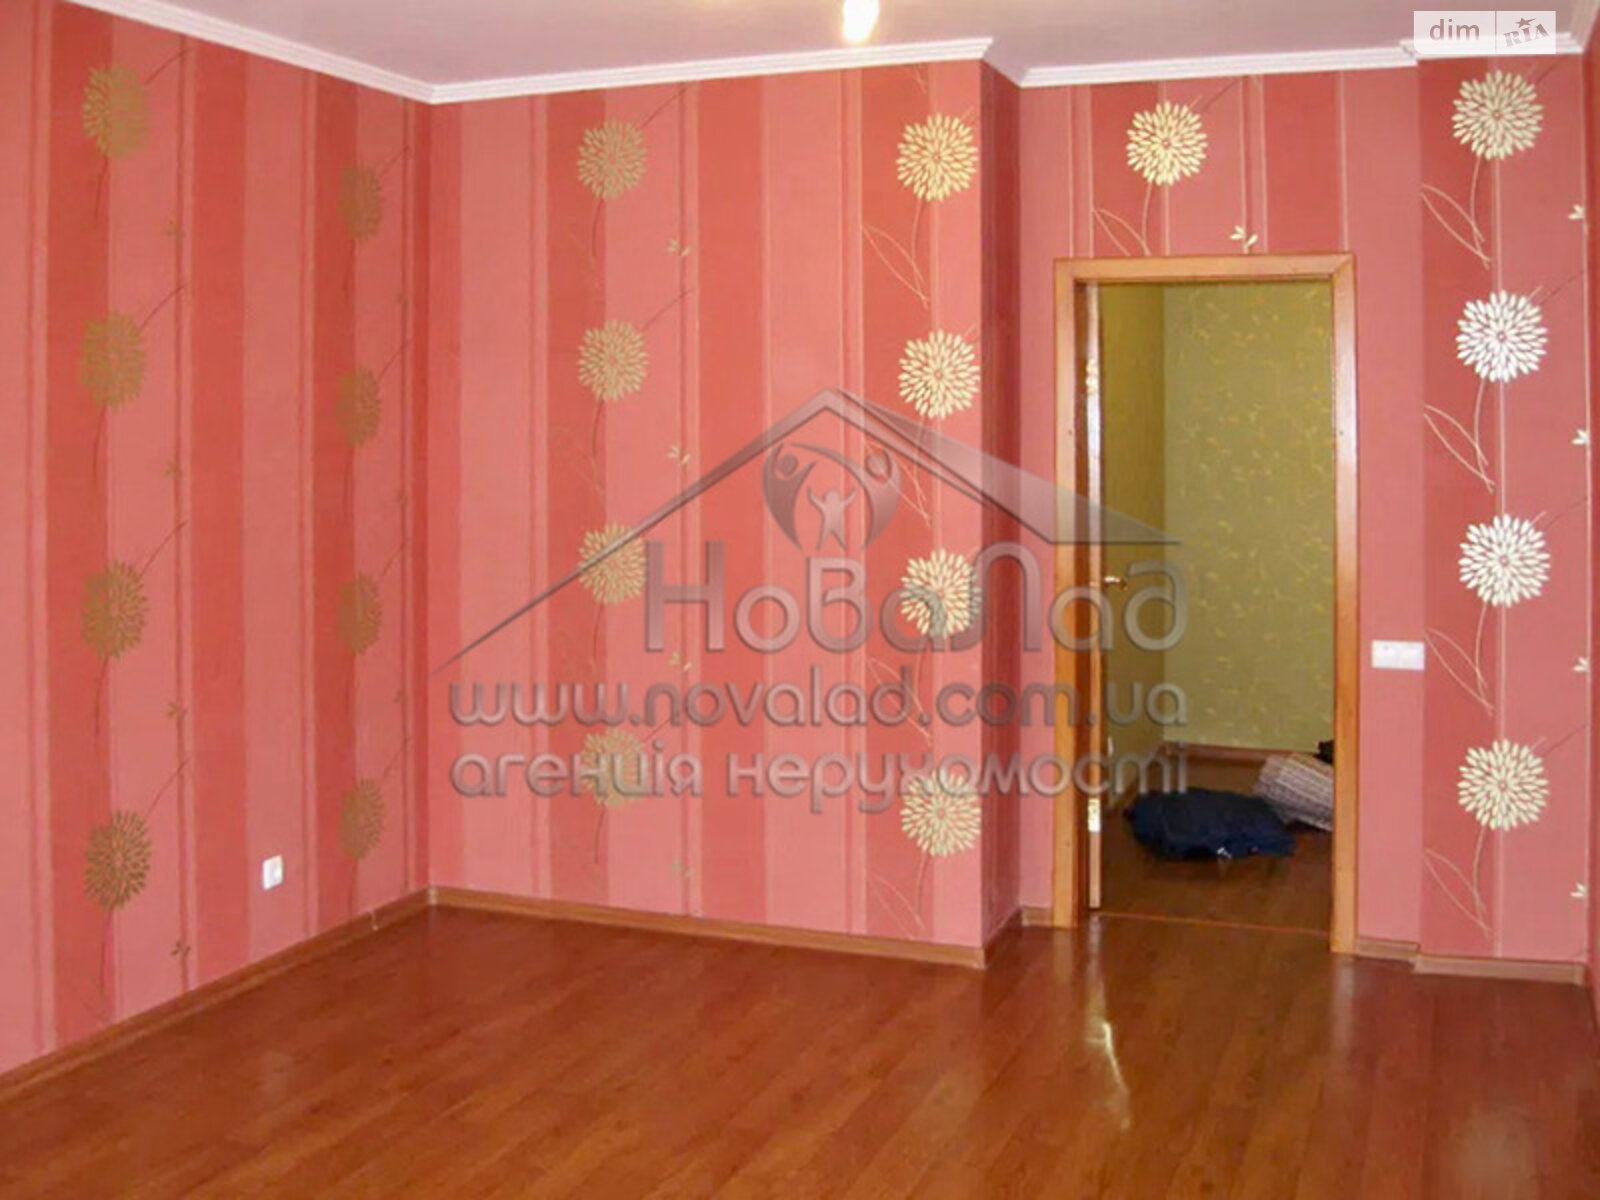 Продажа однокомнатной квартиры в Броварах, на ул. Симоненко 2А, район Пекарня фото 1